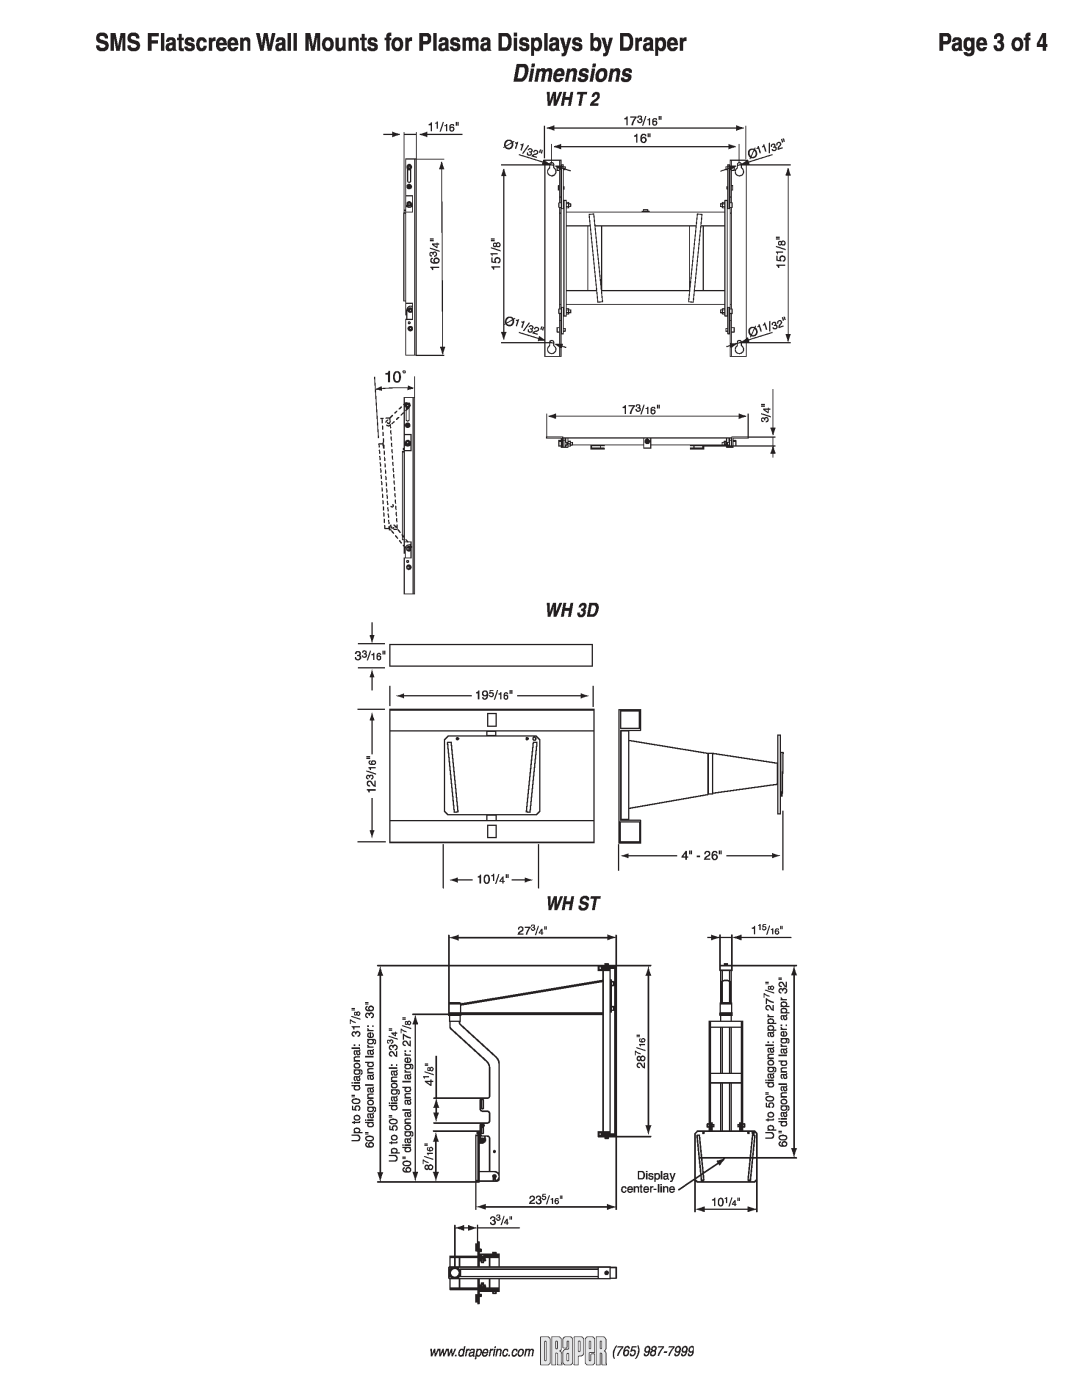 Draper WH ST1150, WH ST 400, WFH ST 2000, WHT2 manual Page 3 of, Wh T, WH 3D, Wh St, Dimensions 